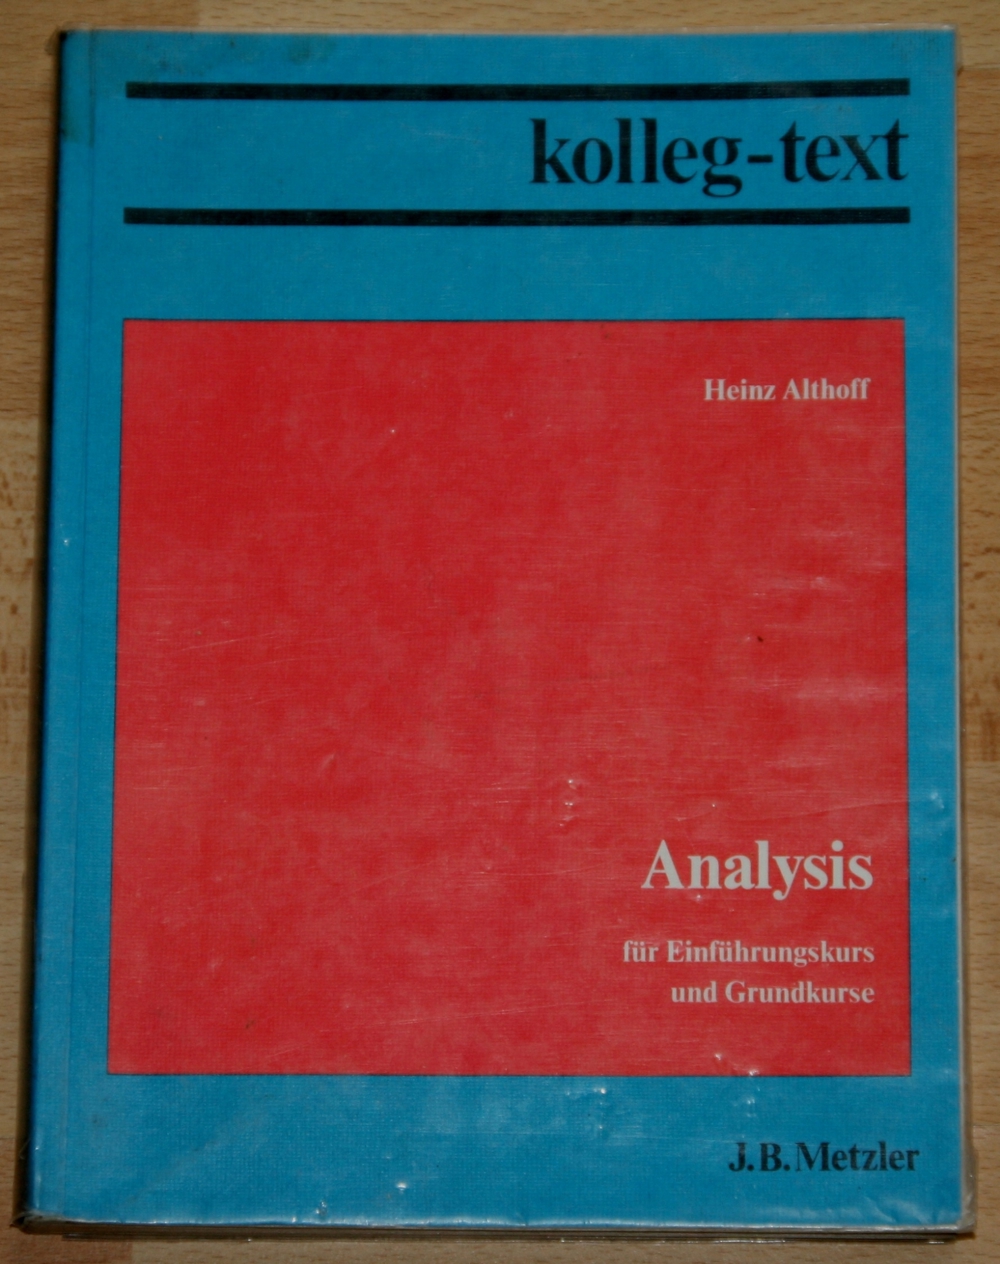 Mathematik-Buch "Analysis" - Kolleg-Text - Oberstufe Gymnasium